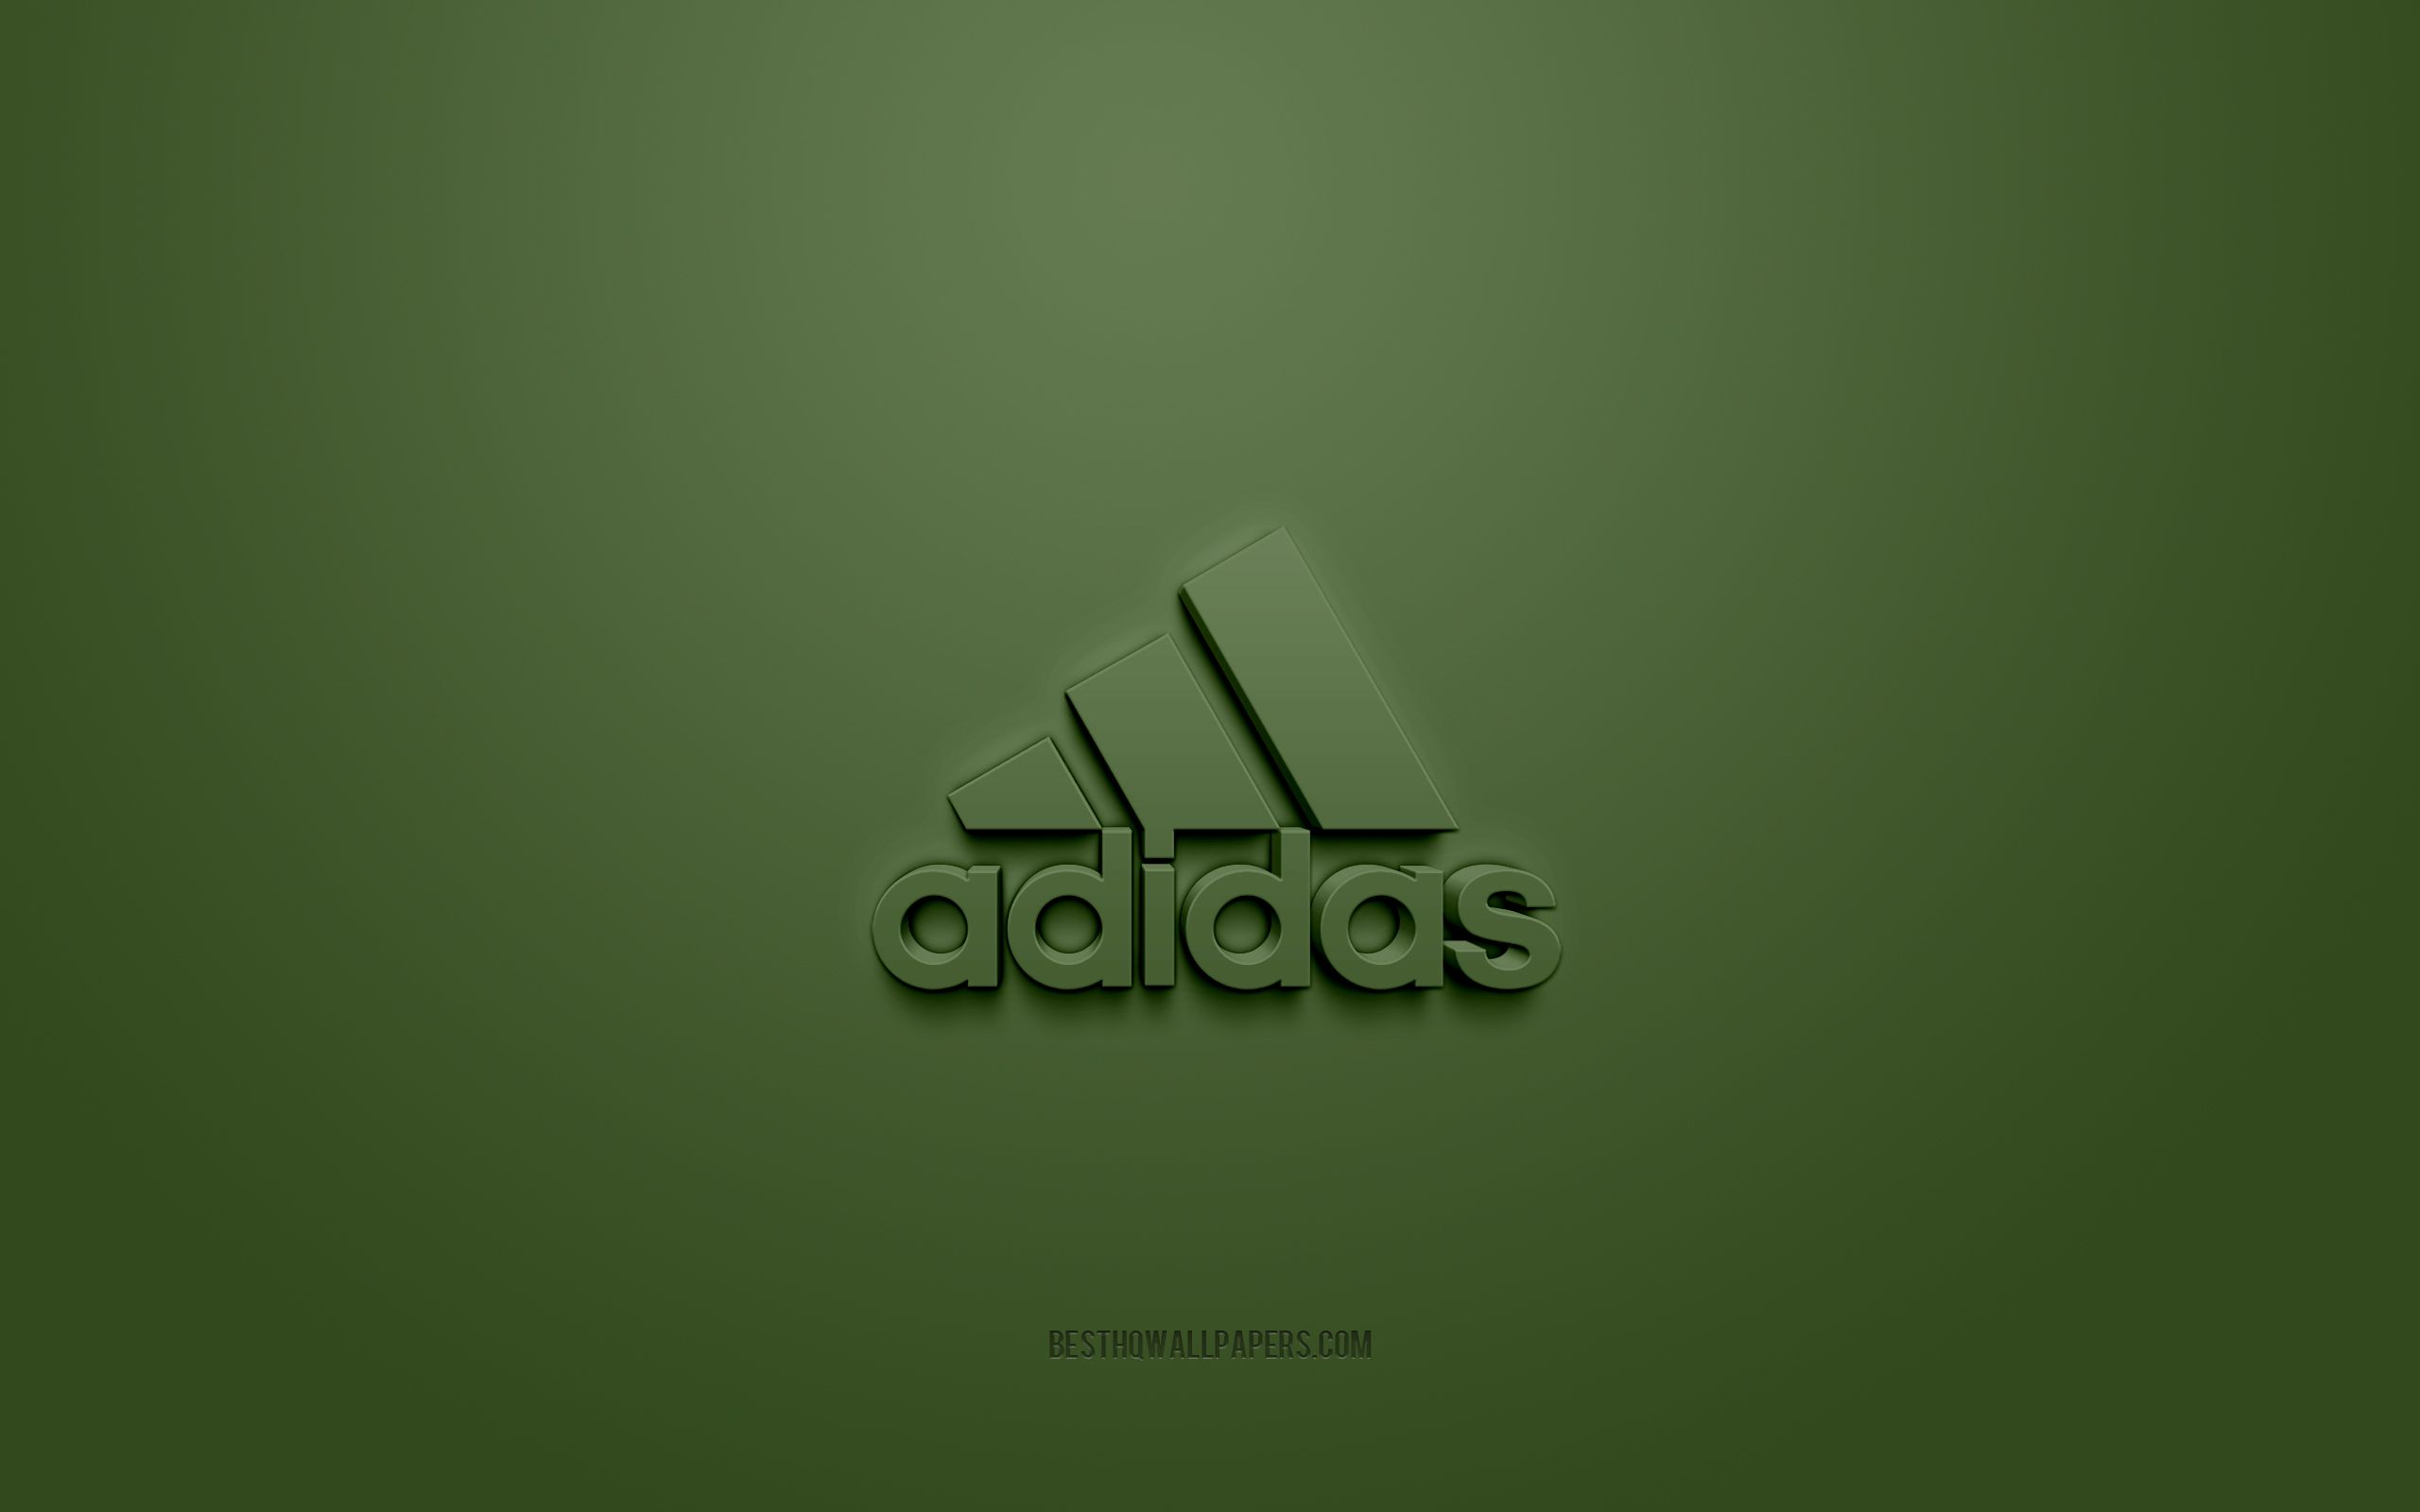 Green Adidas Logo Wallpapers